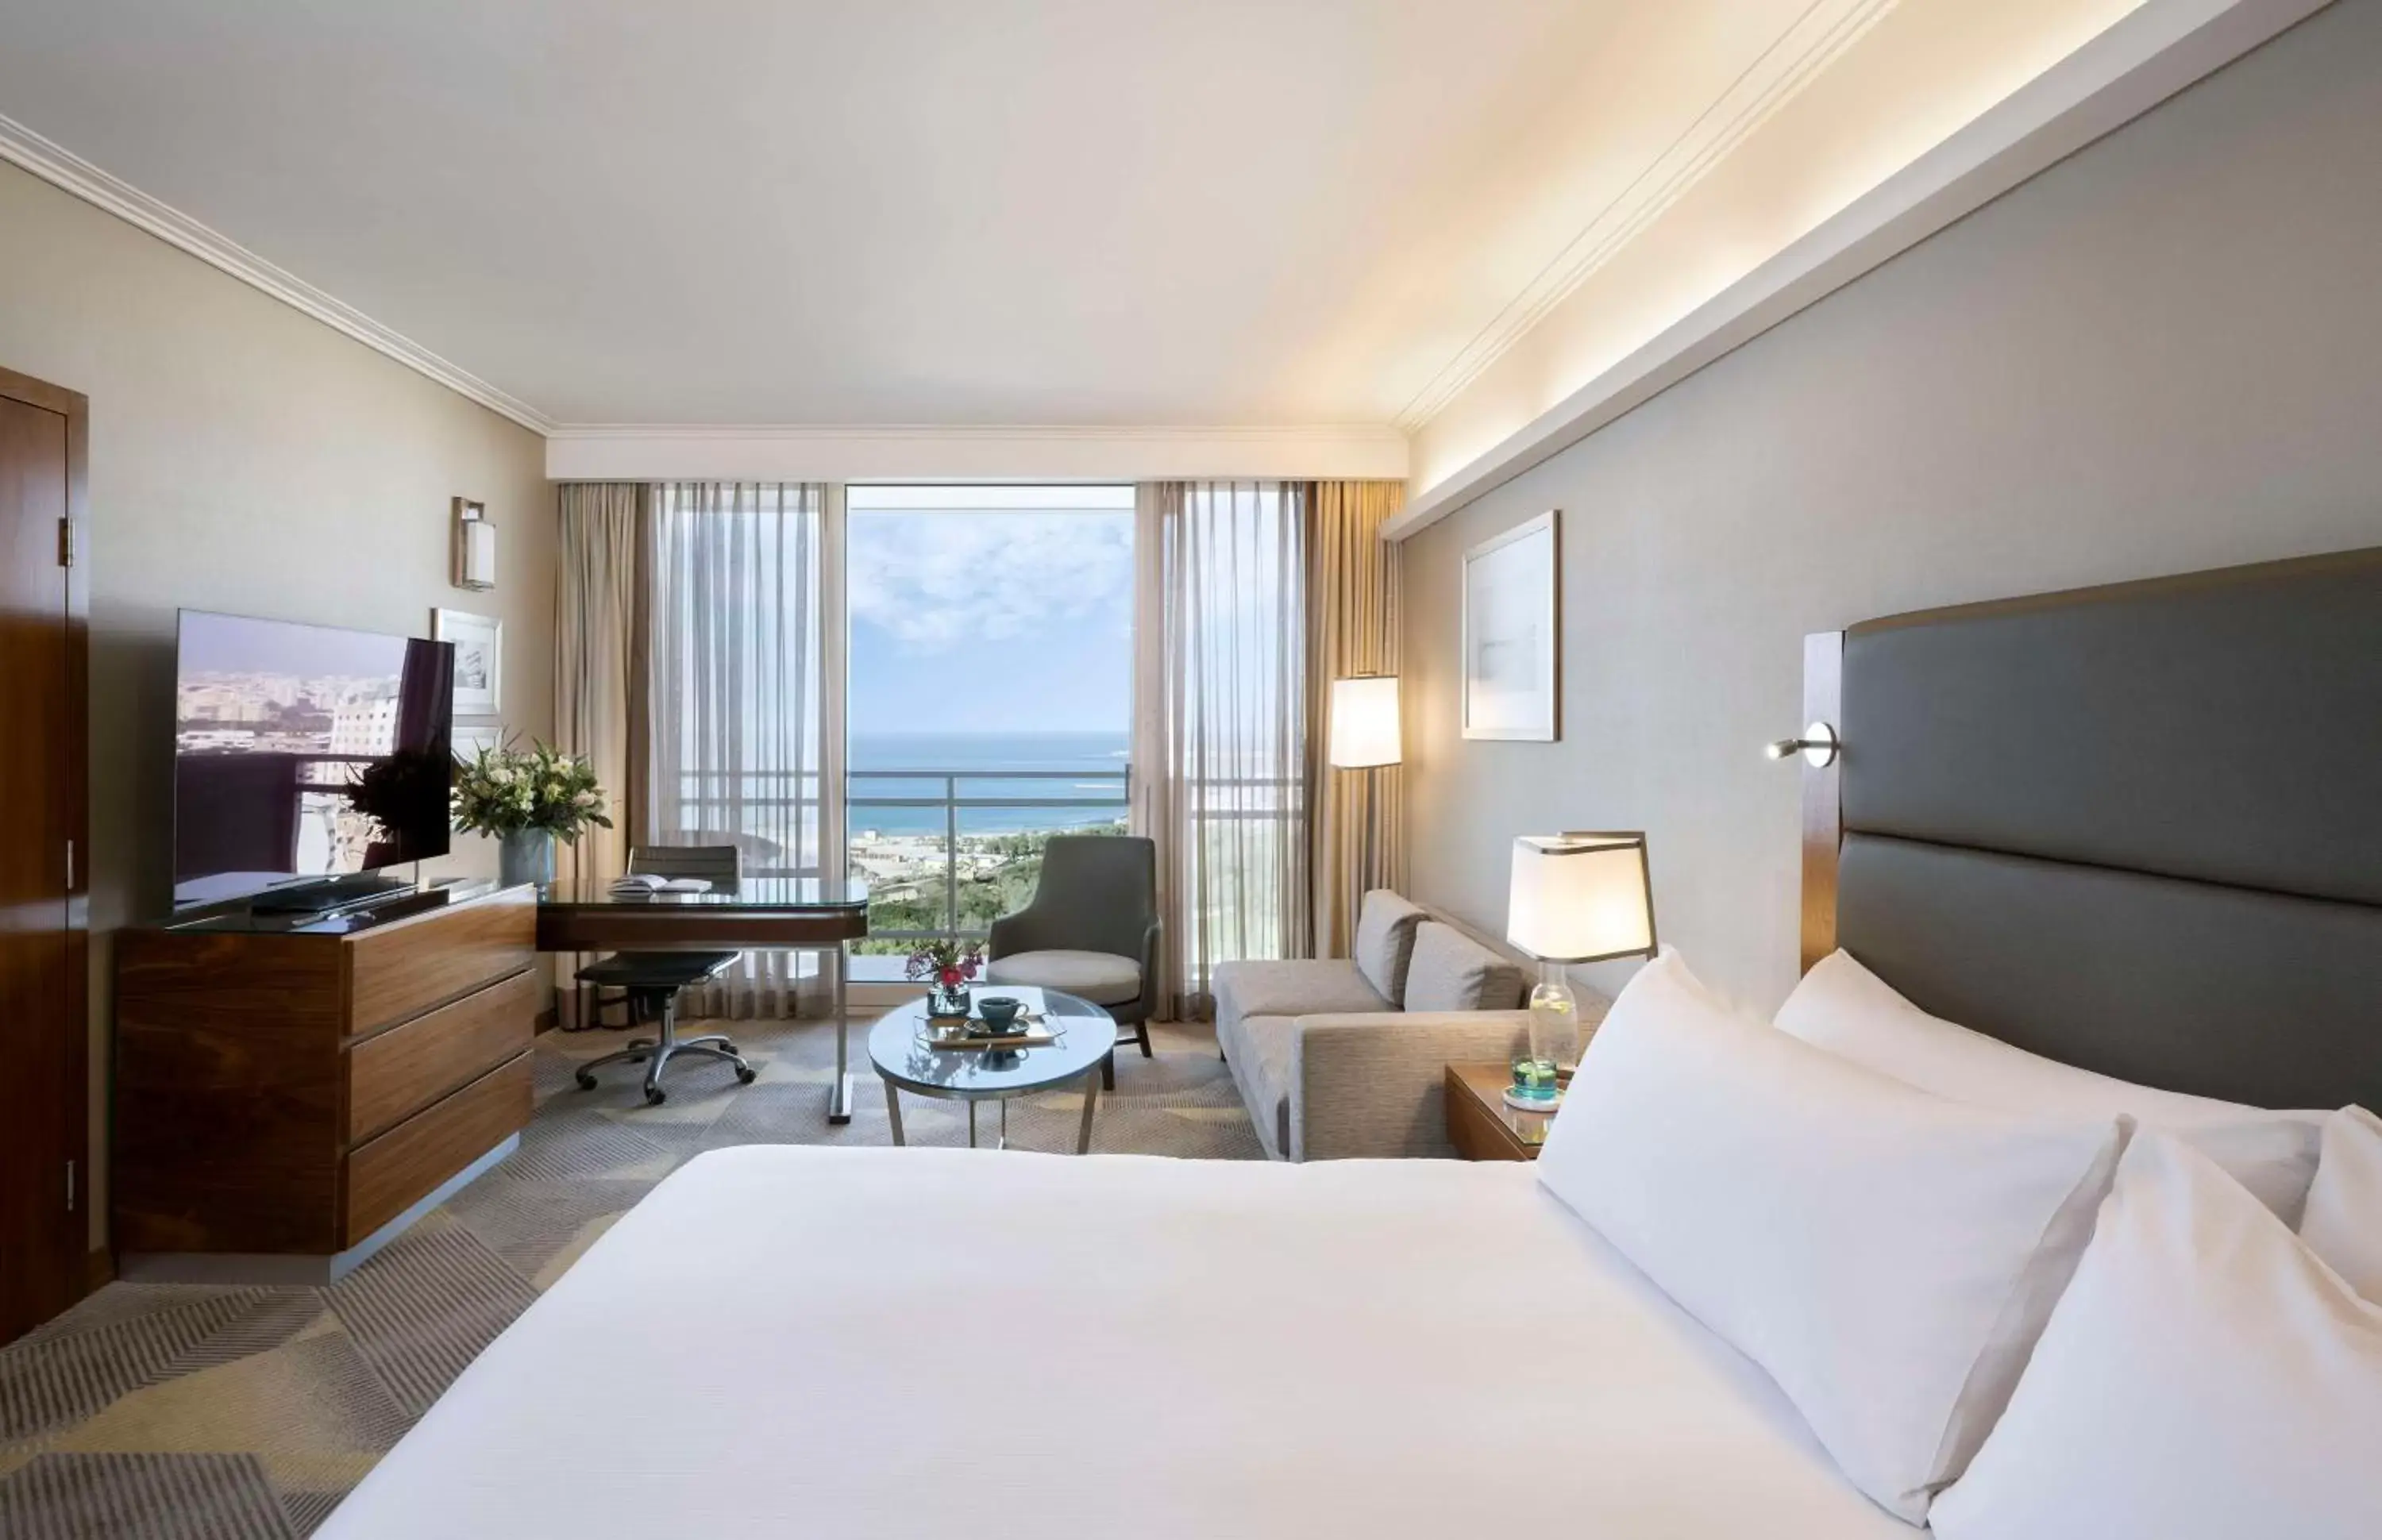 Studio City Executive Sea View Room with Lounge Access in Hilton Tel Aviv Hotel